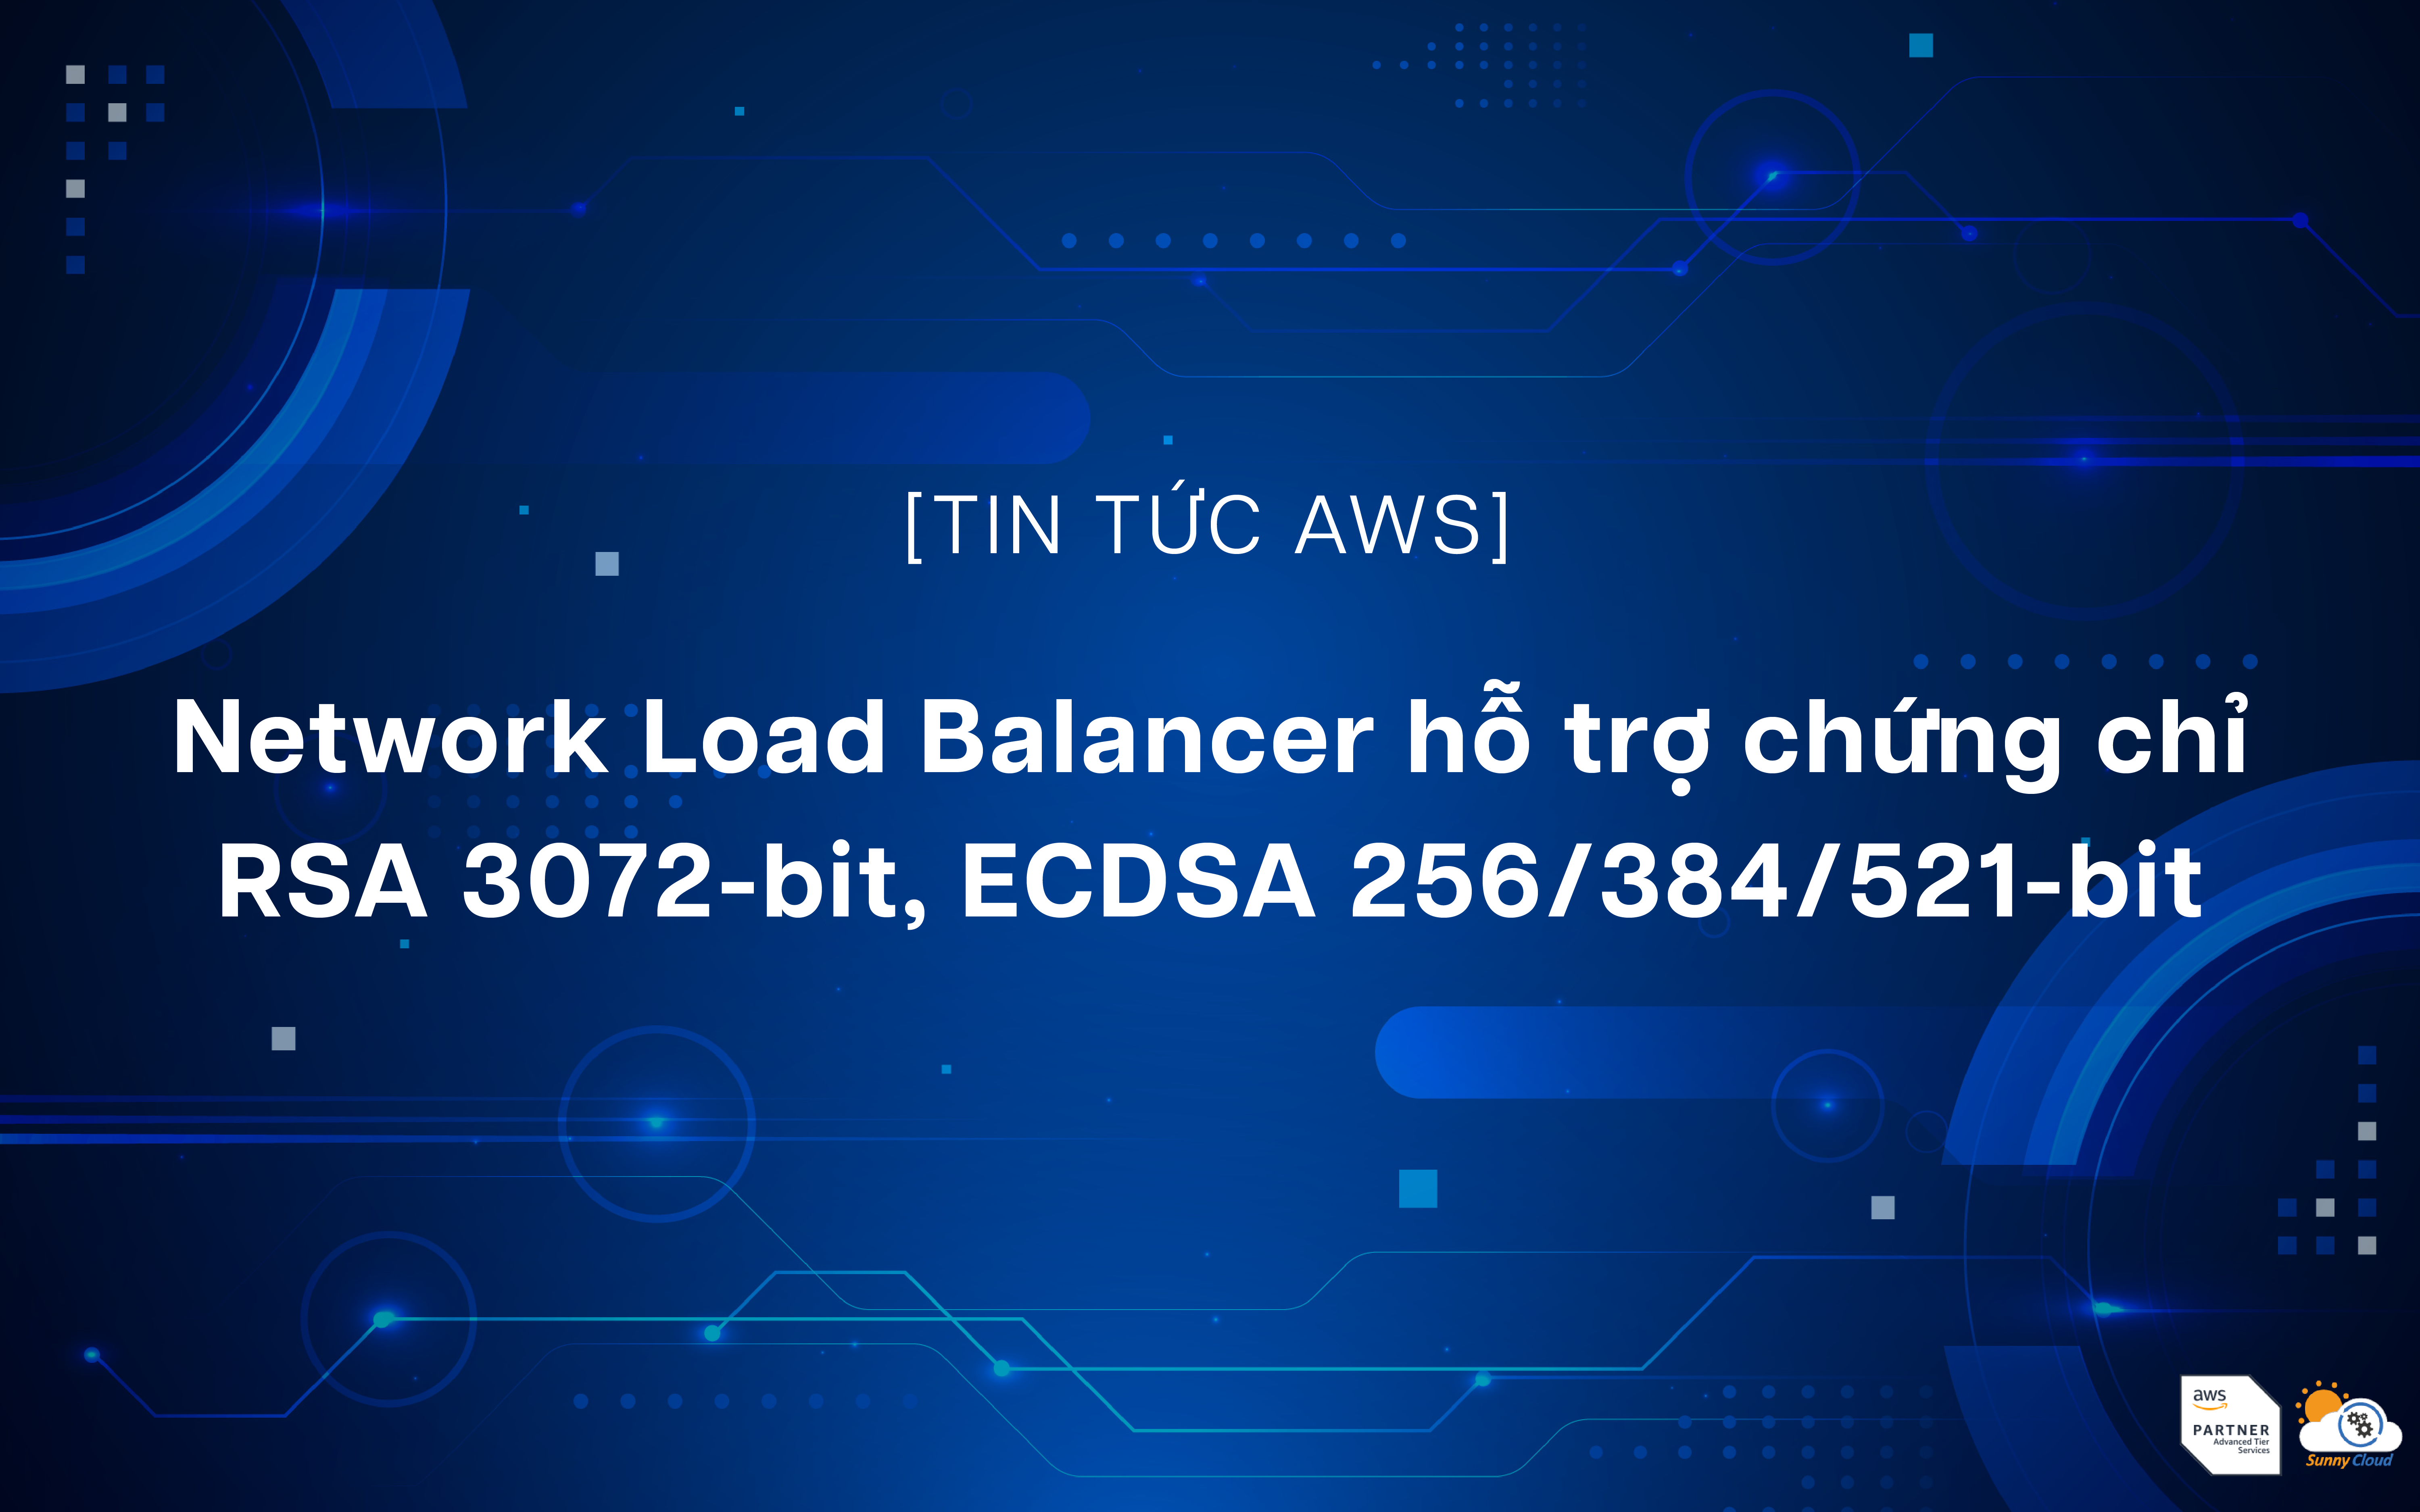 Network Load Balancer hỗ trợ chứng chỉ RSA 3072-bit, ECDSA 256/384/521-bit